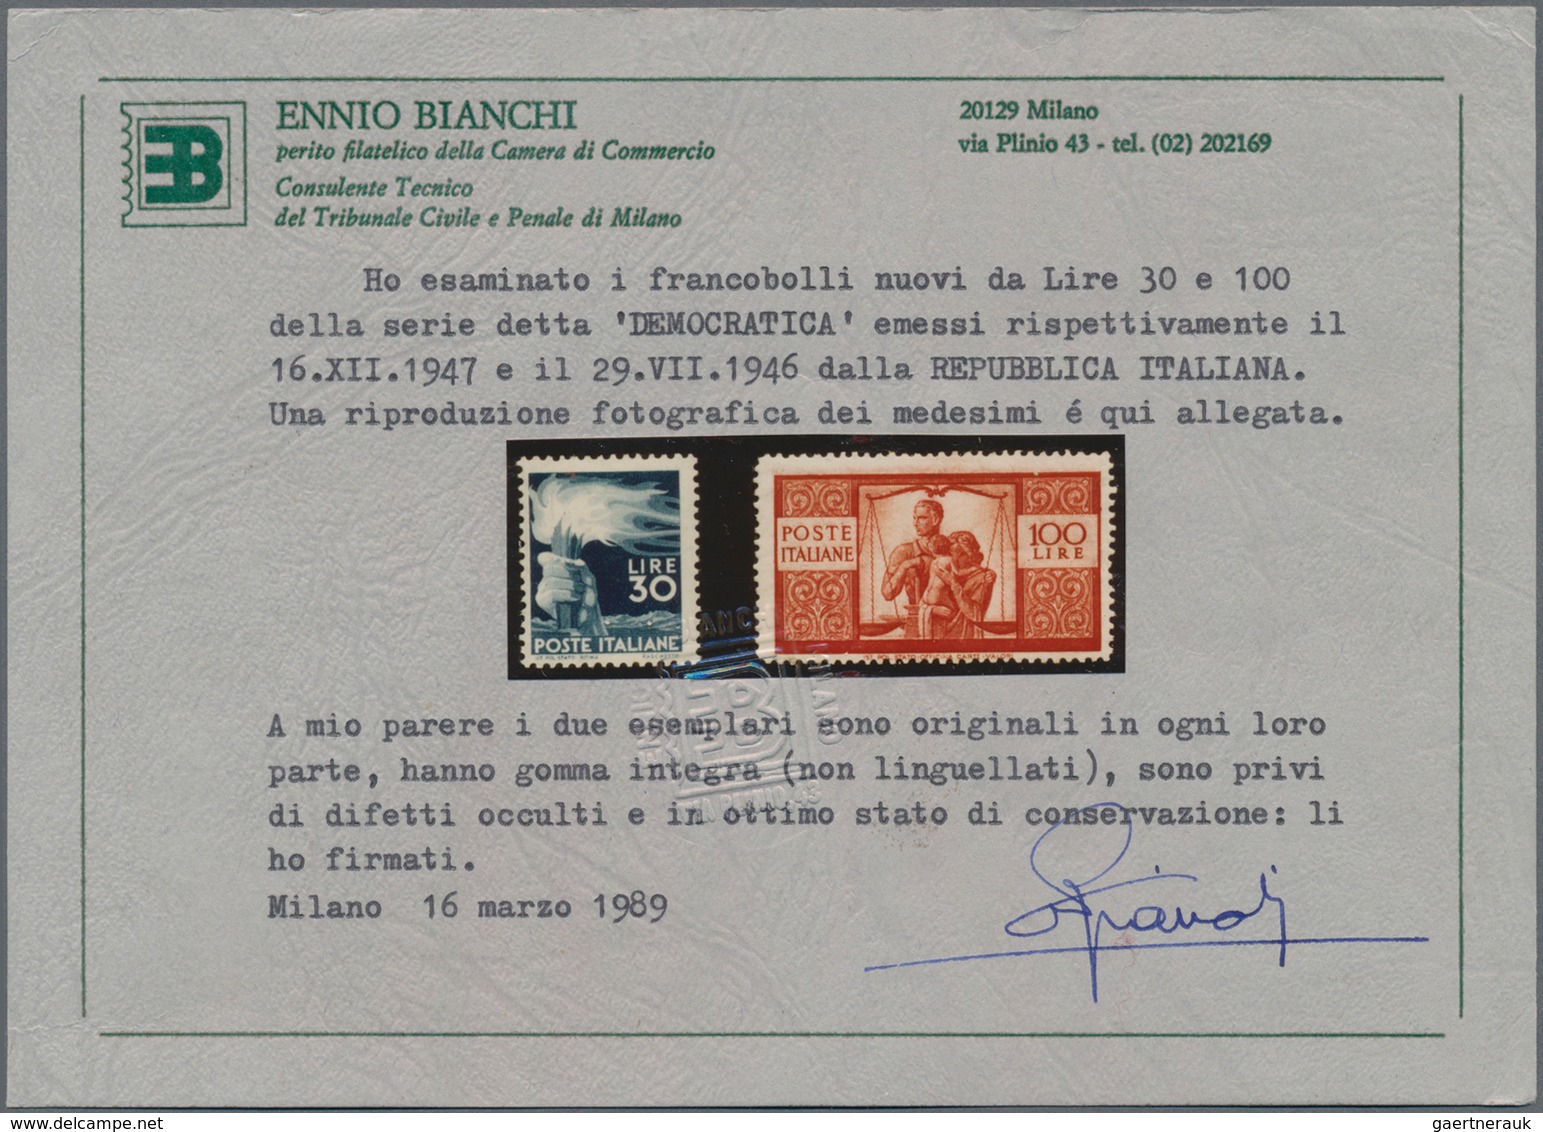 Italien: 1945/1948. Definitives Set "Democratica", 23 Values, Fine Mint Never Hinged, Regular Center - Mint/hinged